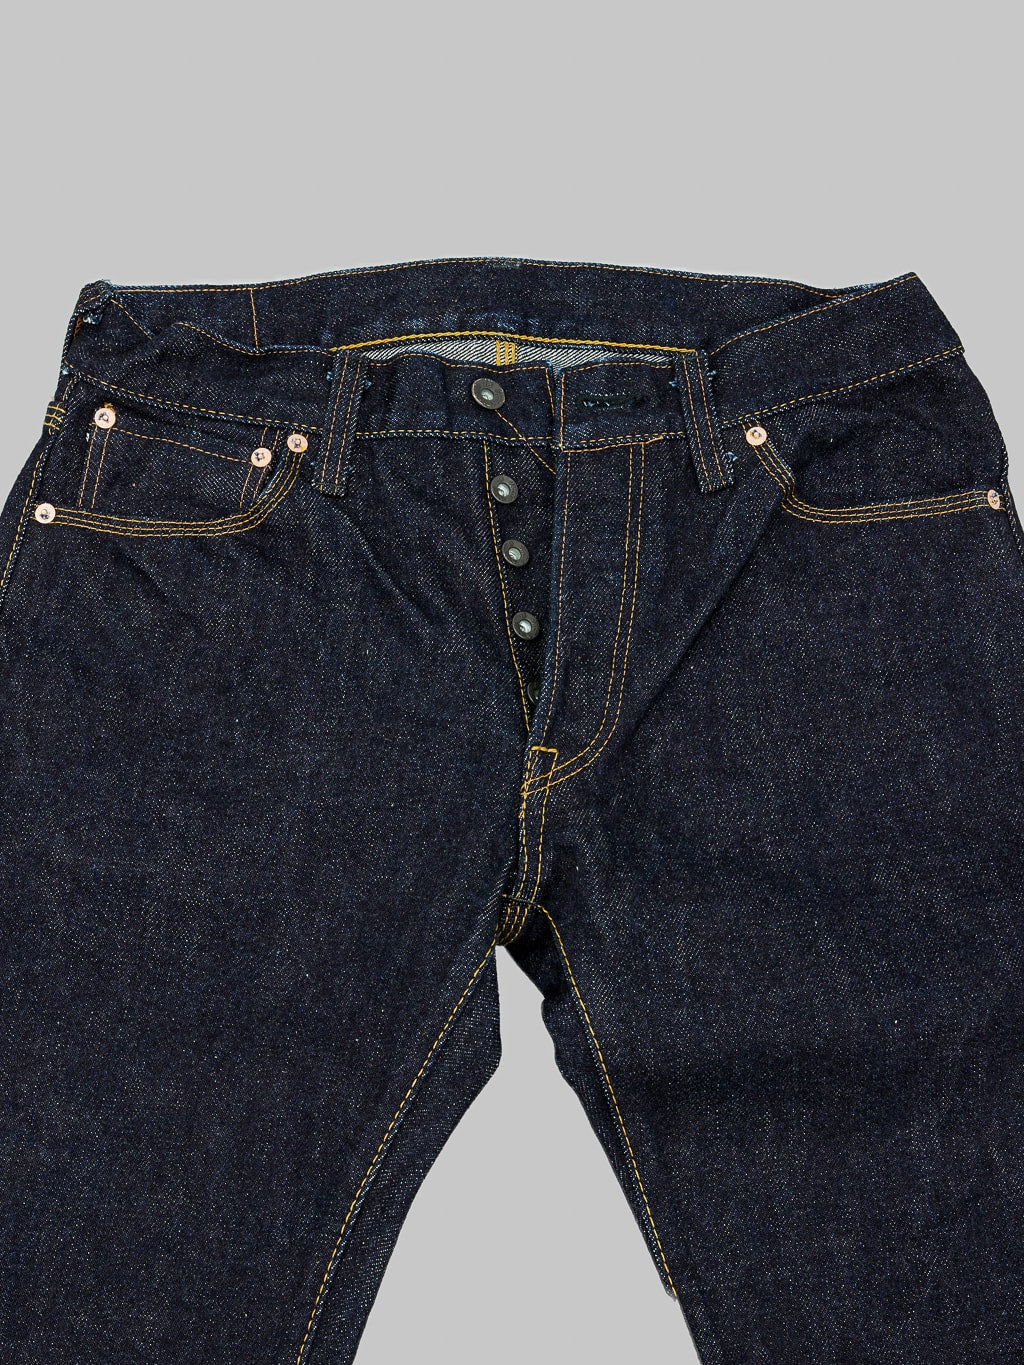 Samurai Jeans S511XX 25oz Kirinji Slim Tapered selvedge Jeans waist